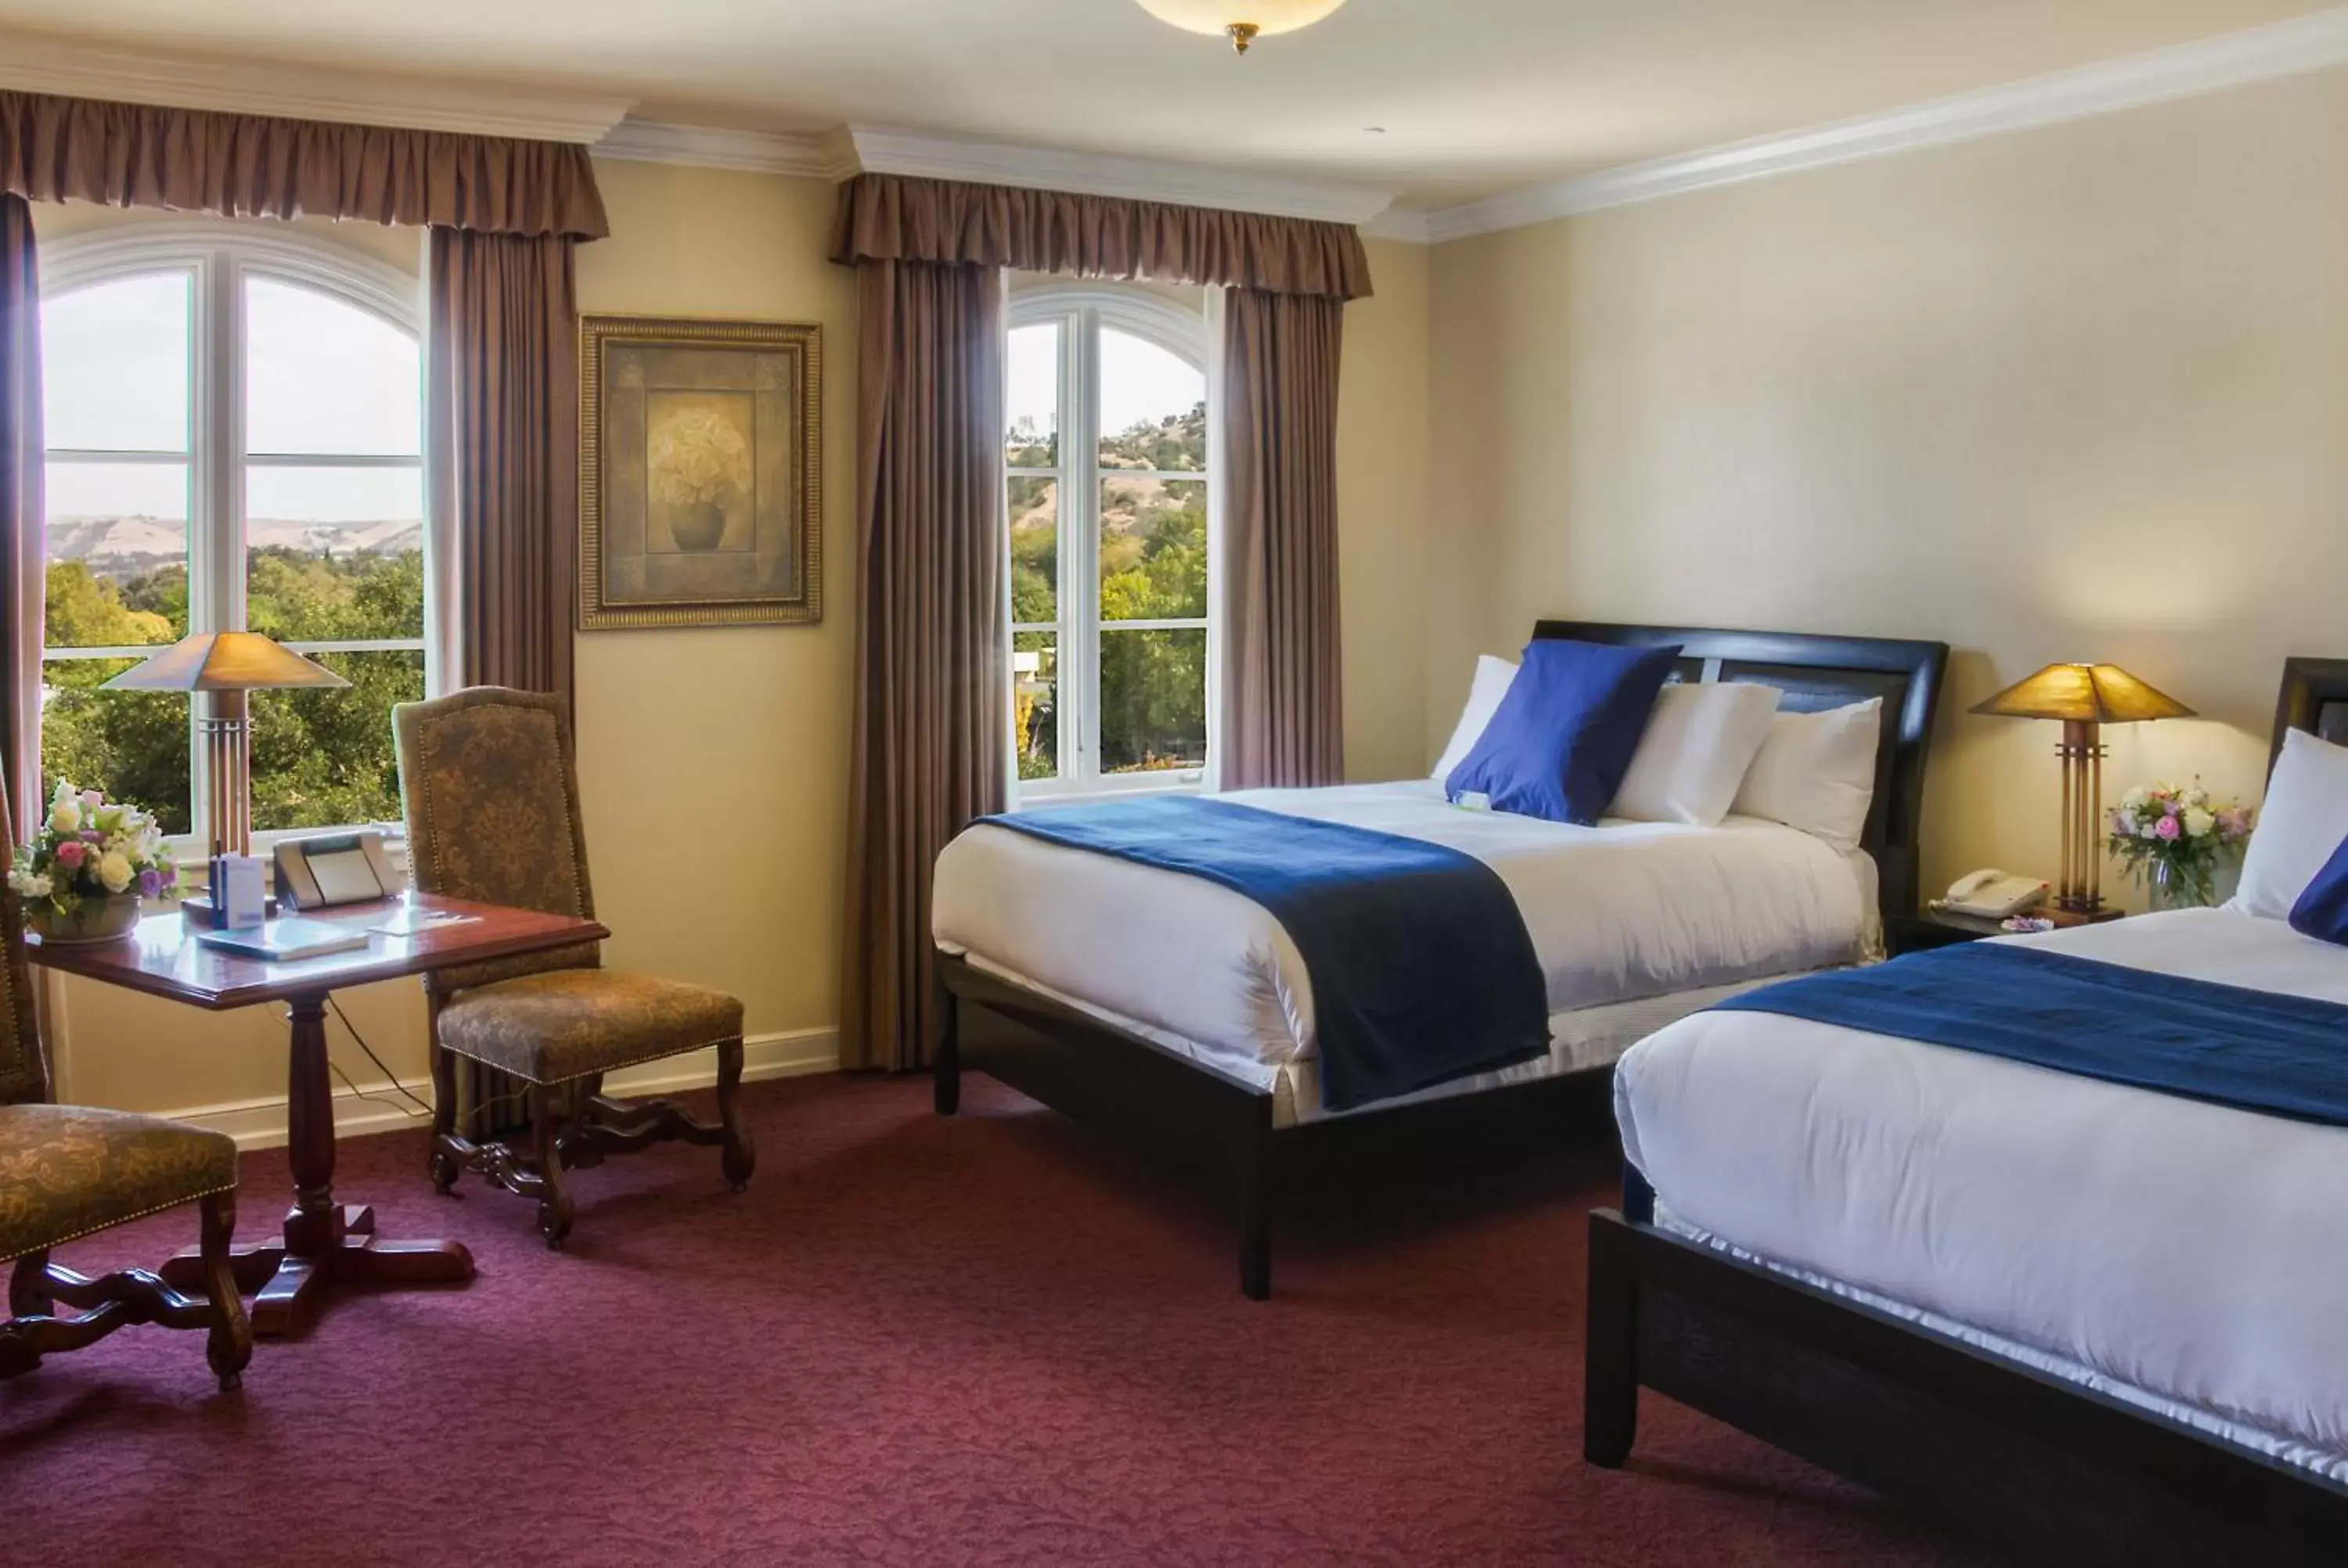 Deluxe Queen Room with Two Queen Beds in Carlton Hotel